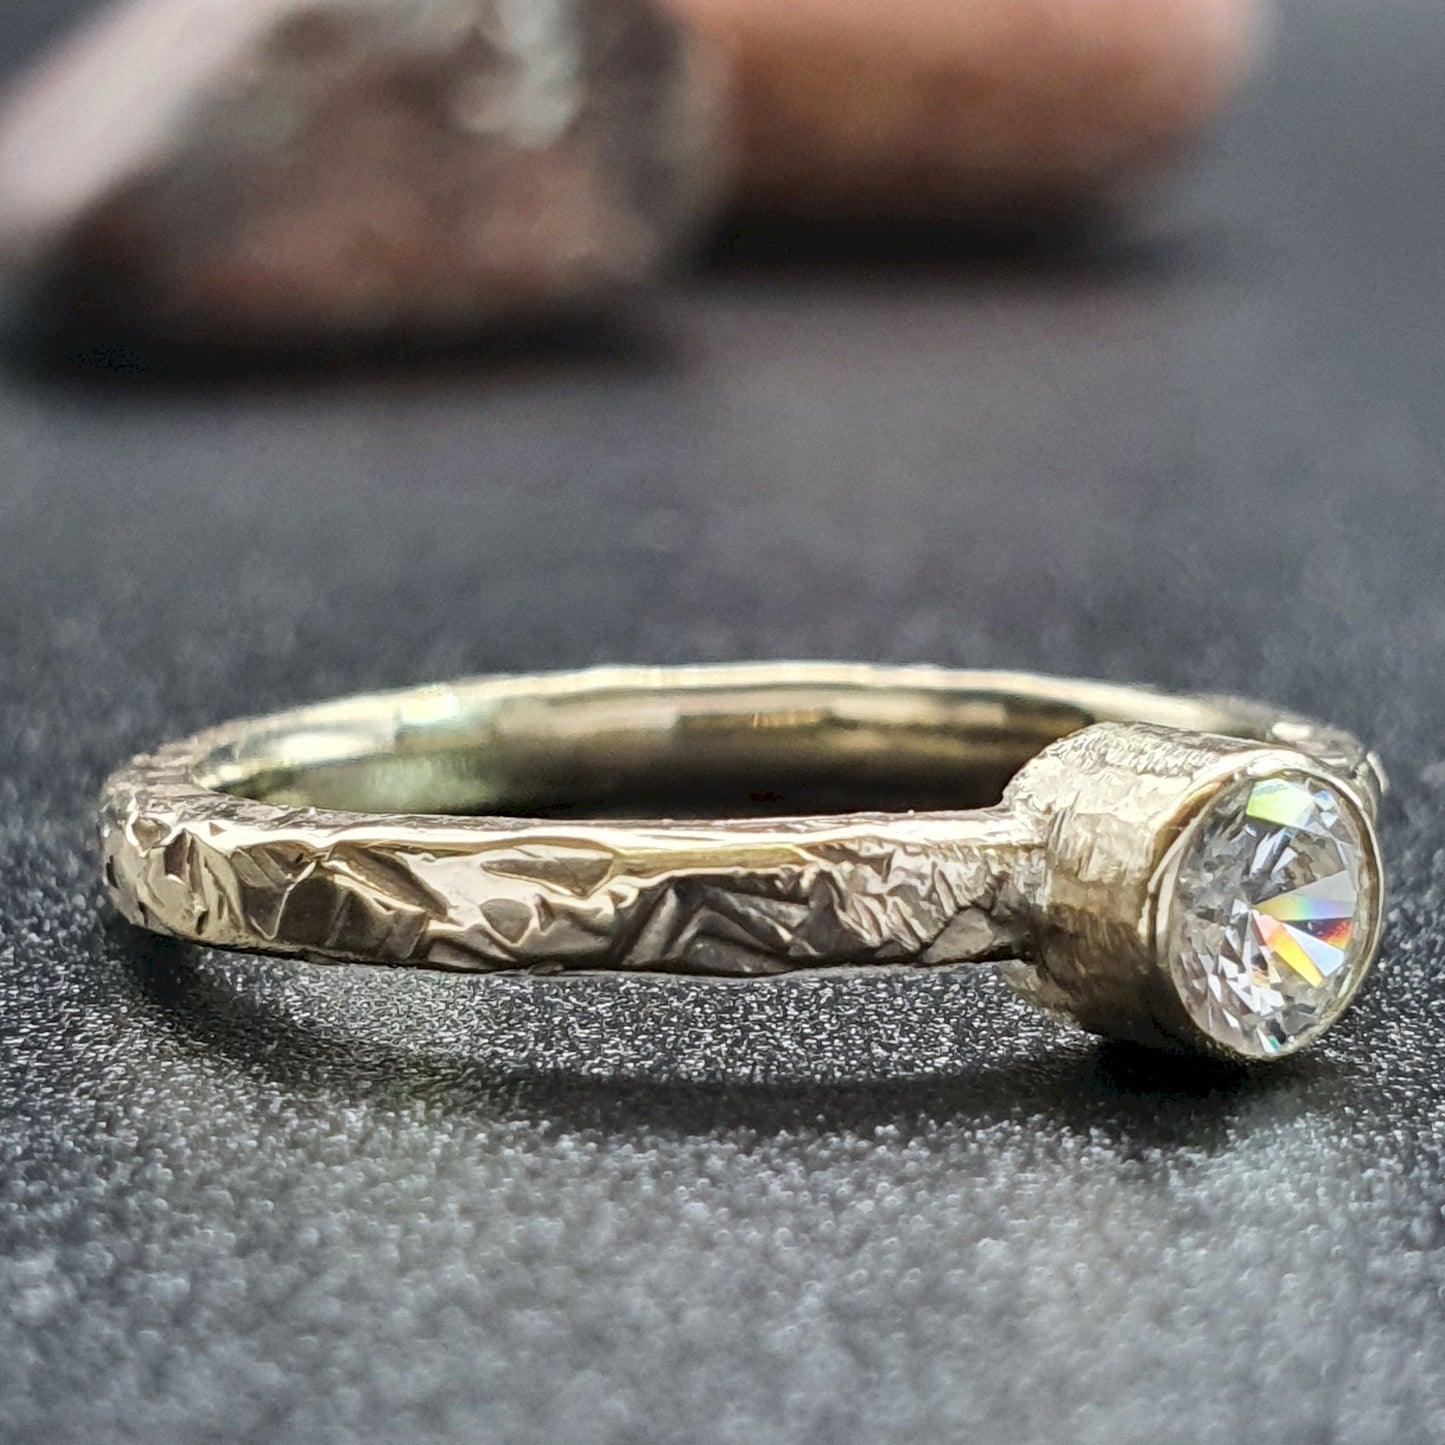 Solitaire quarter carat diamond Fire design yellow gold ring